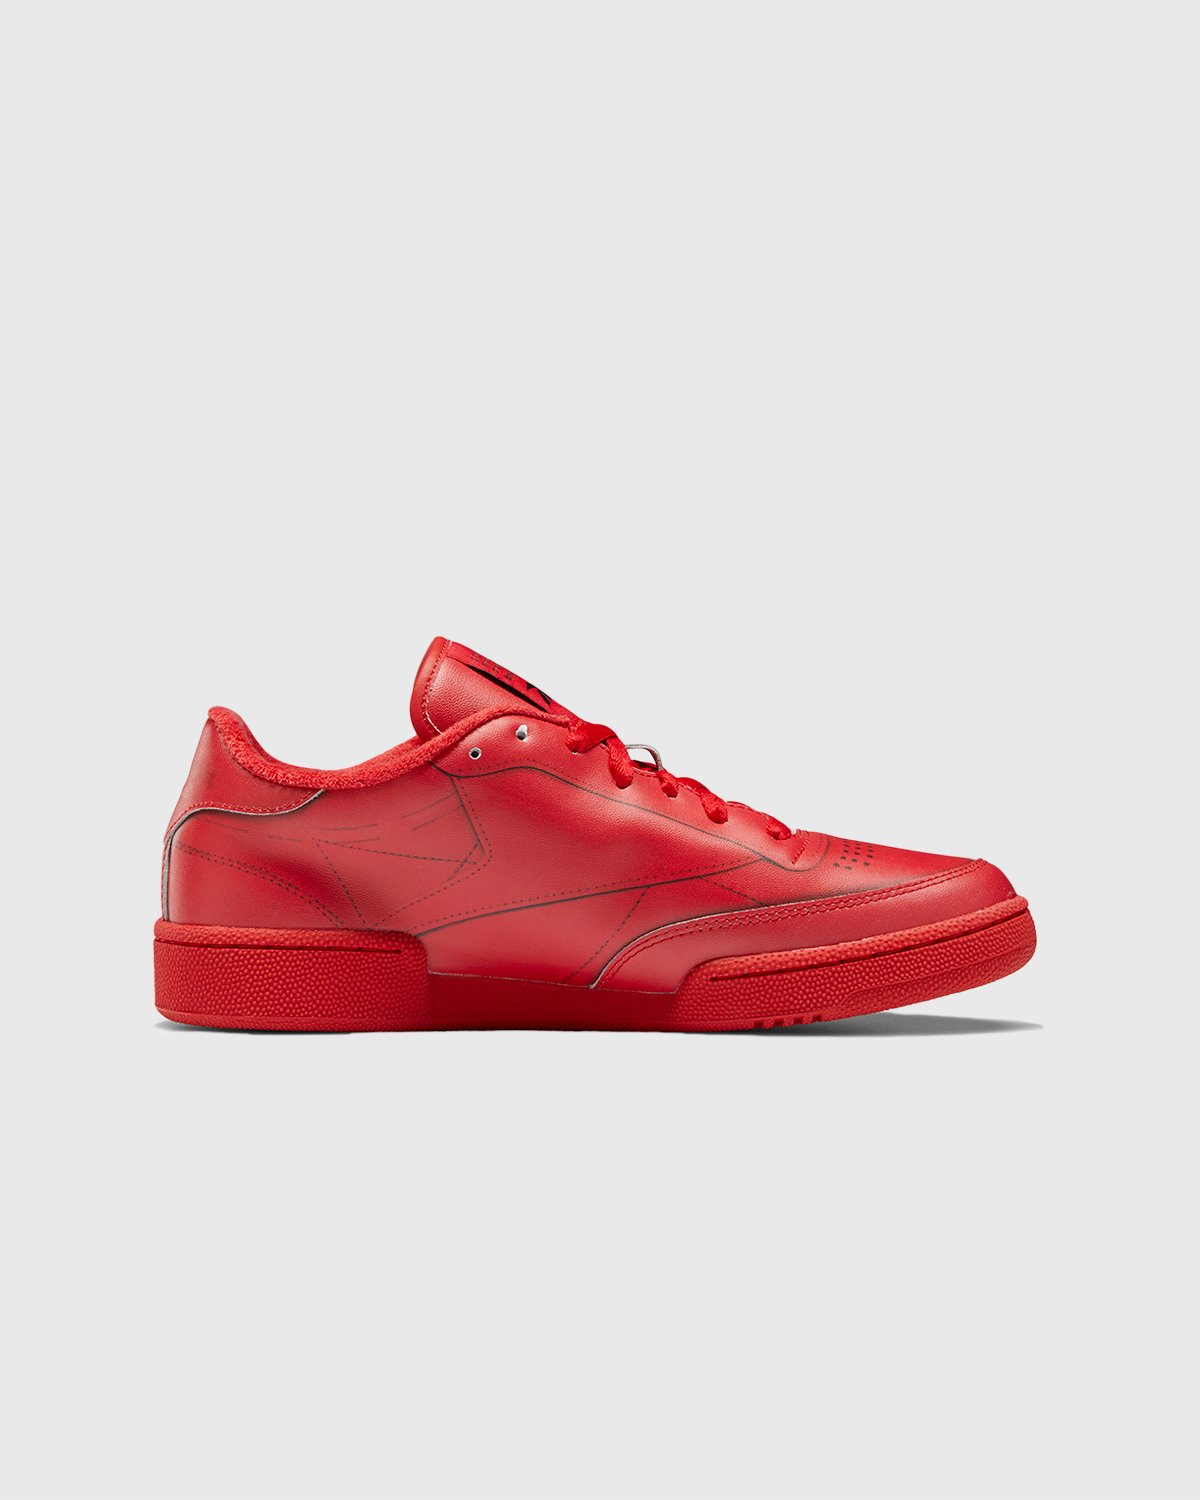 Maison Margiela x Reebok - Club C Trompe L’Oeil Red - Footwear - Red - Image 5